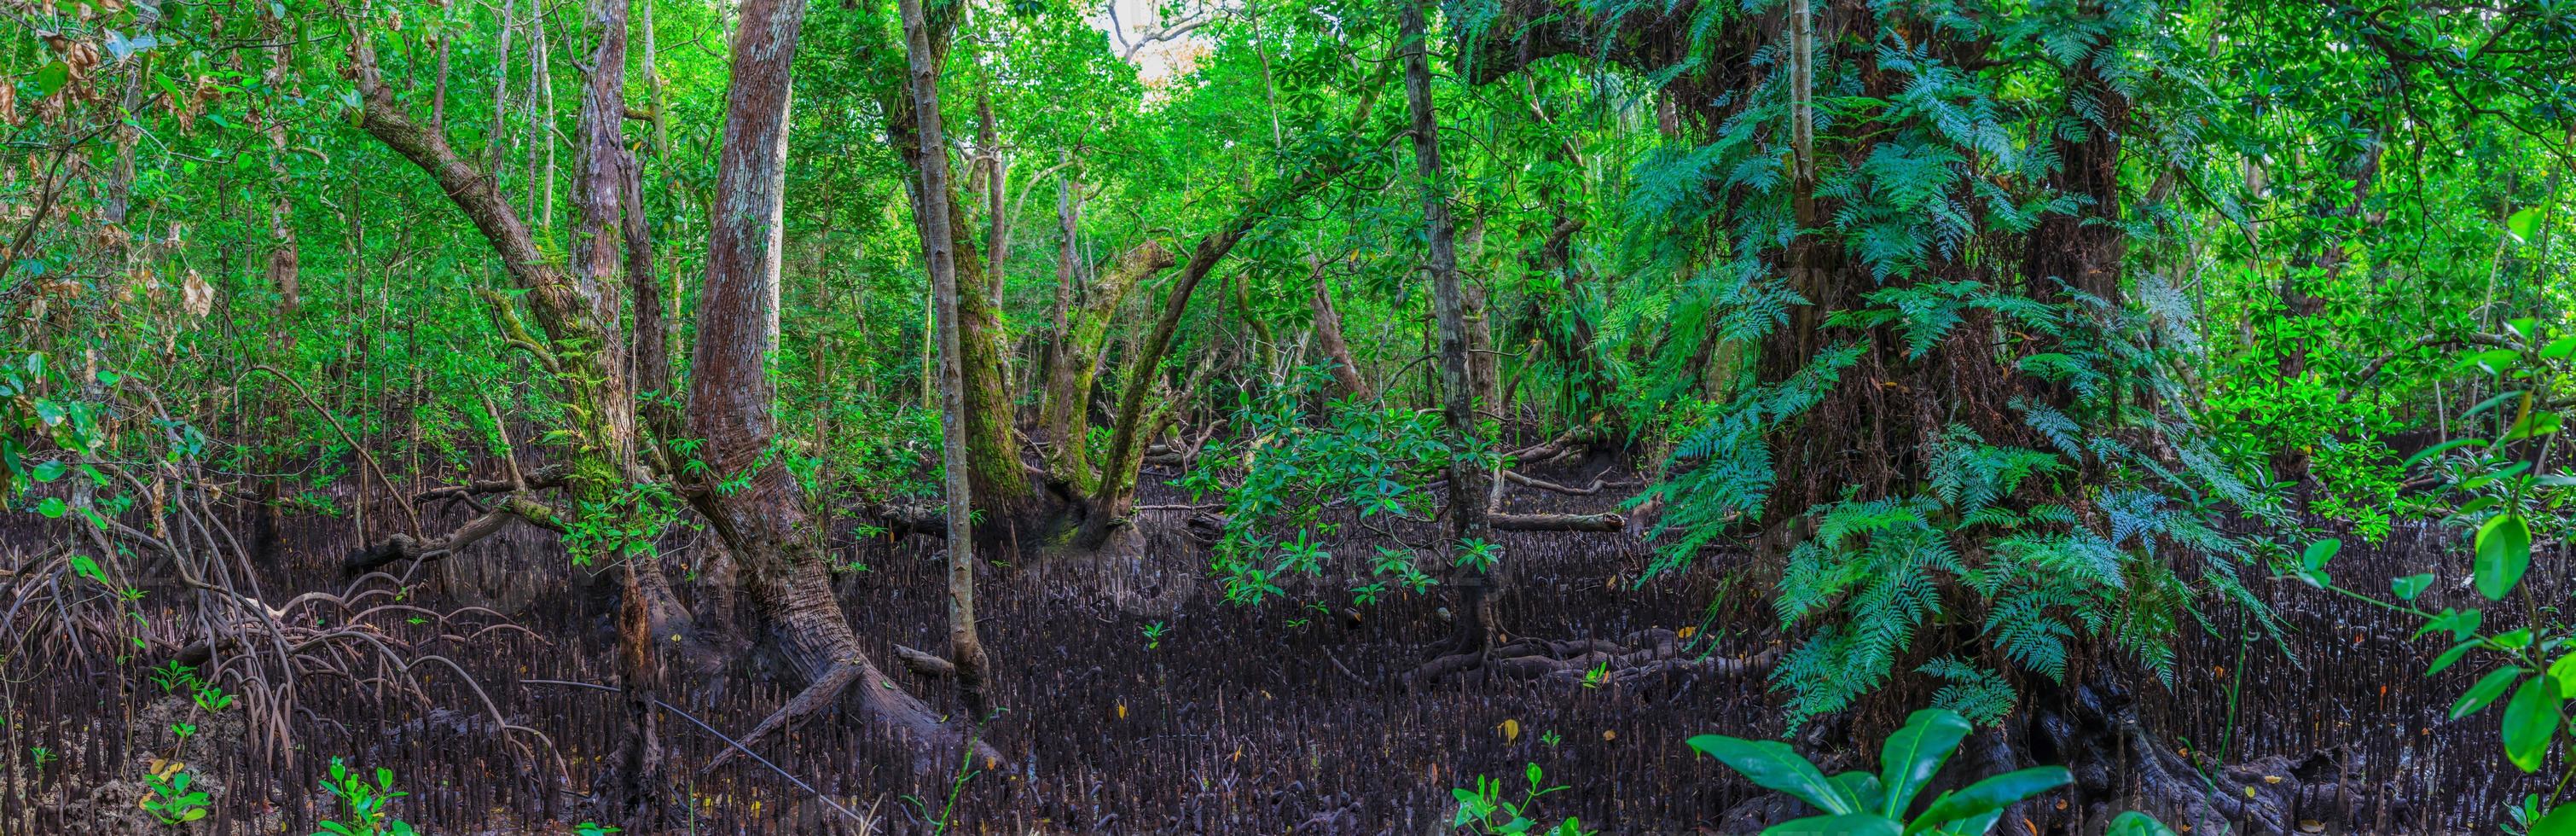 imagen panorámica dentro de un bosque de selva foto